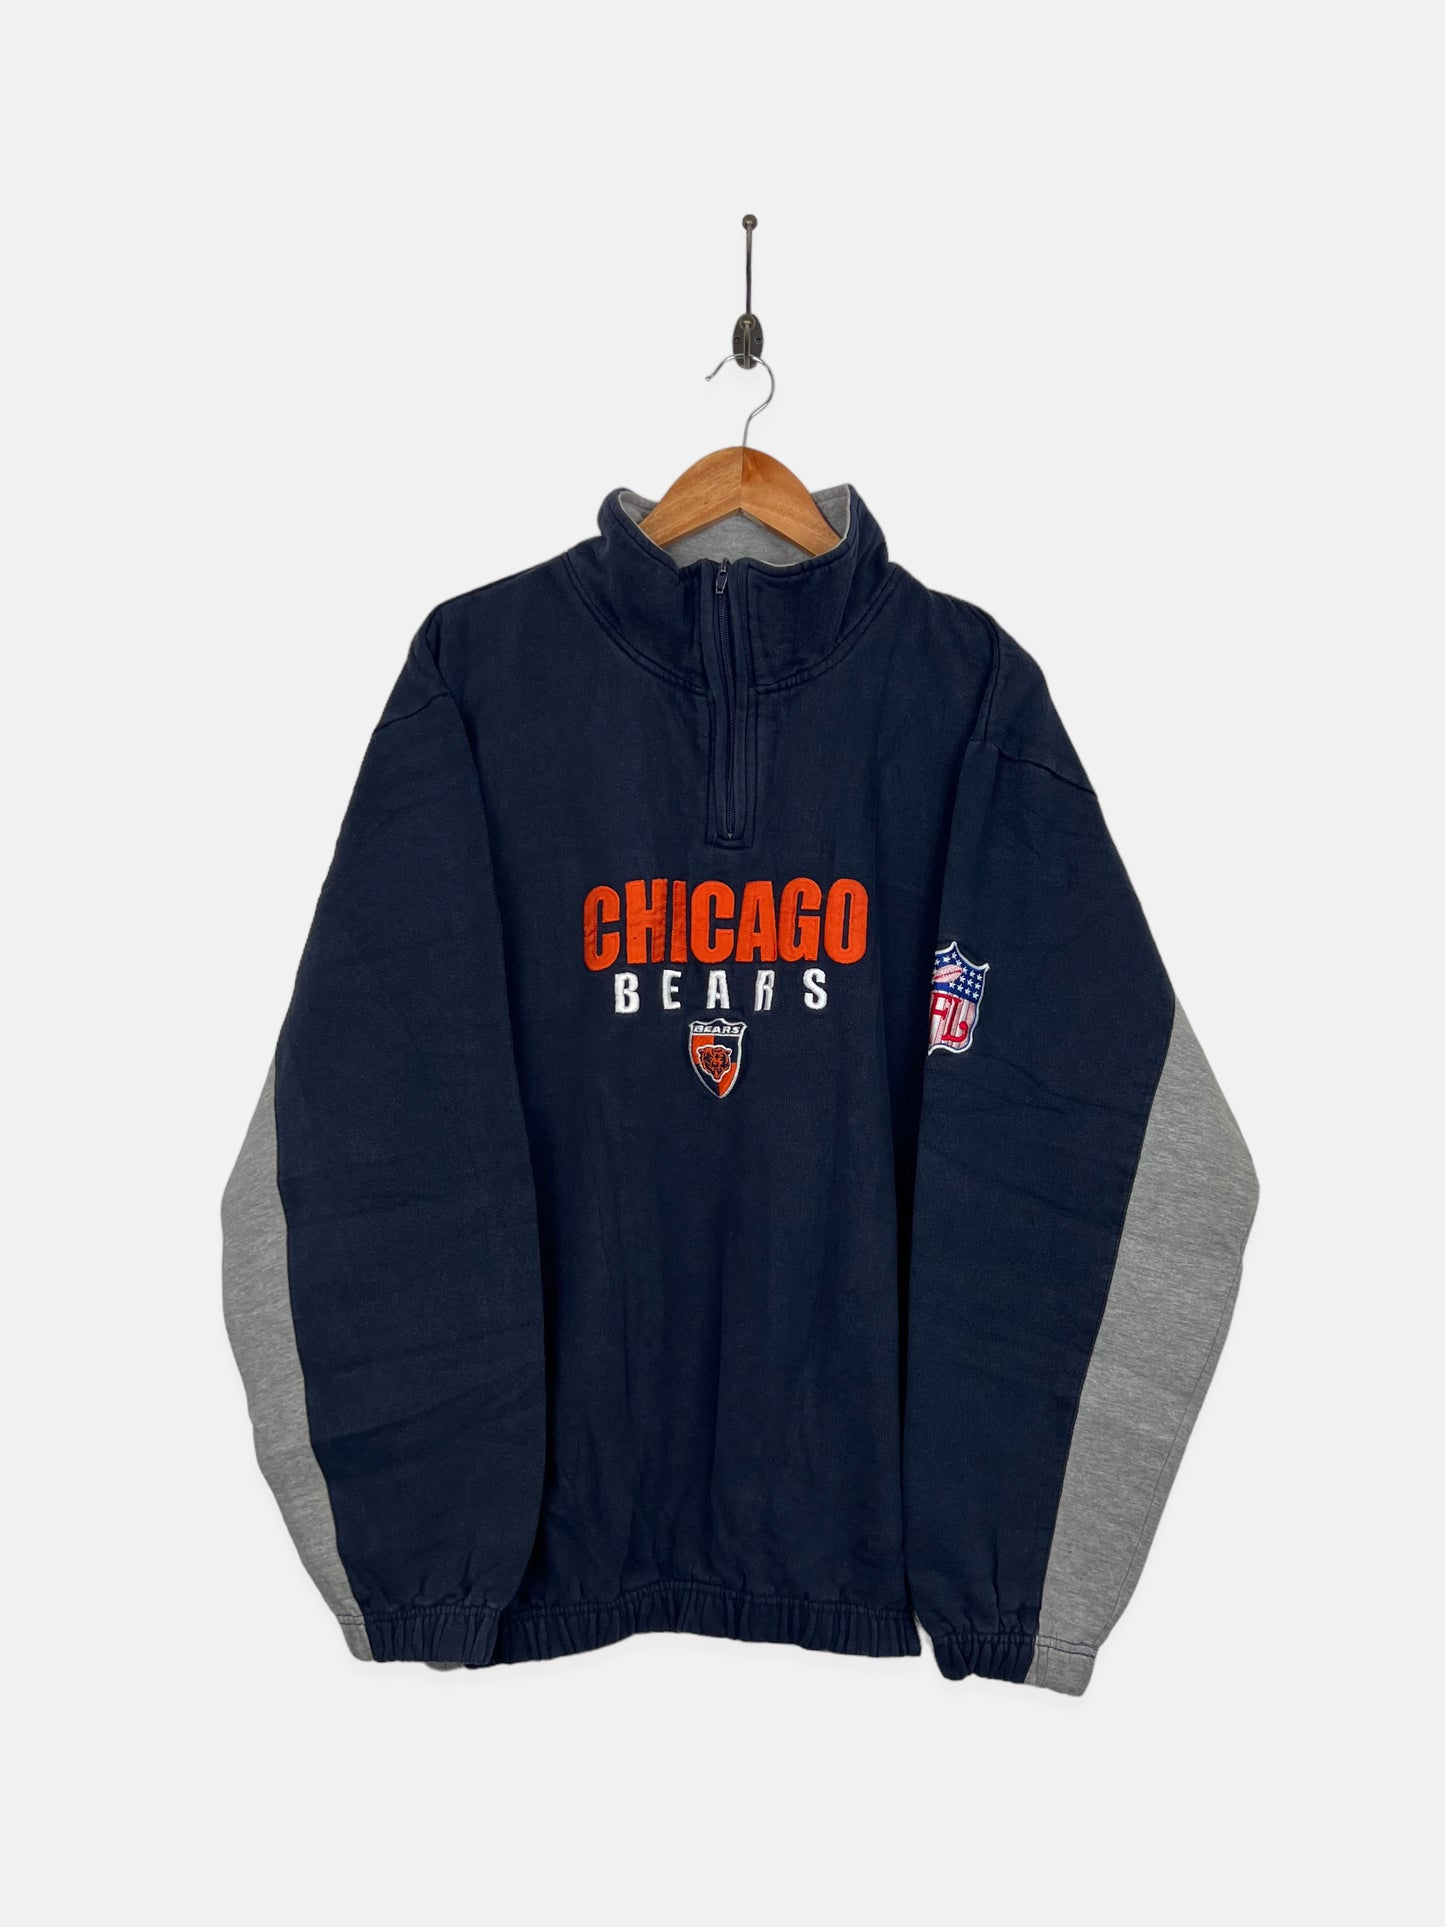 90's Chicago Bears NFL Embroidered Vintage Quarterzip Sweatshirt Size L-XL